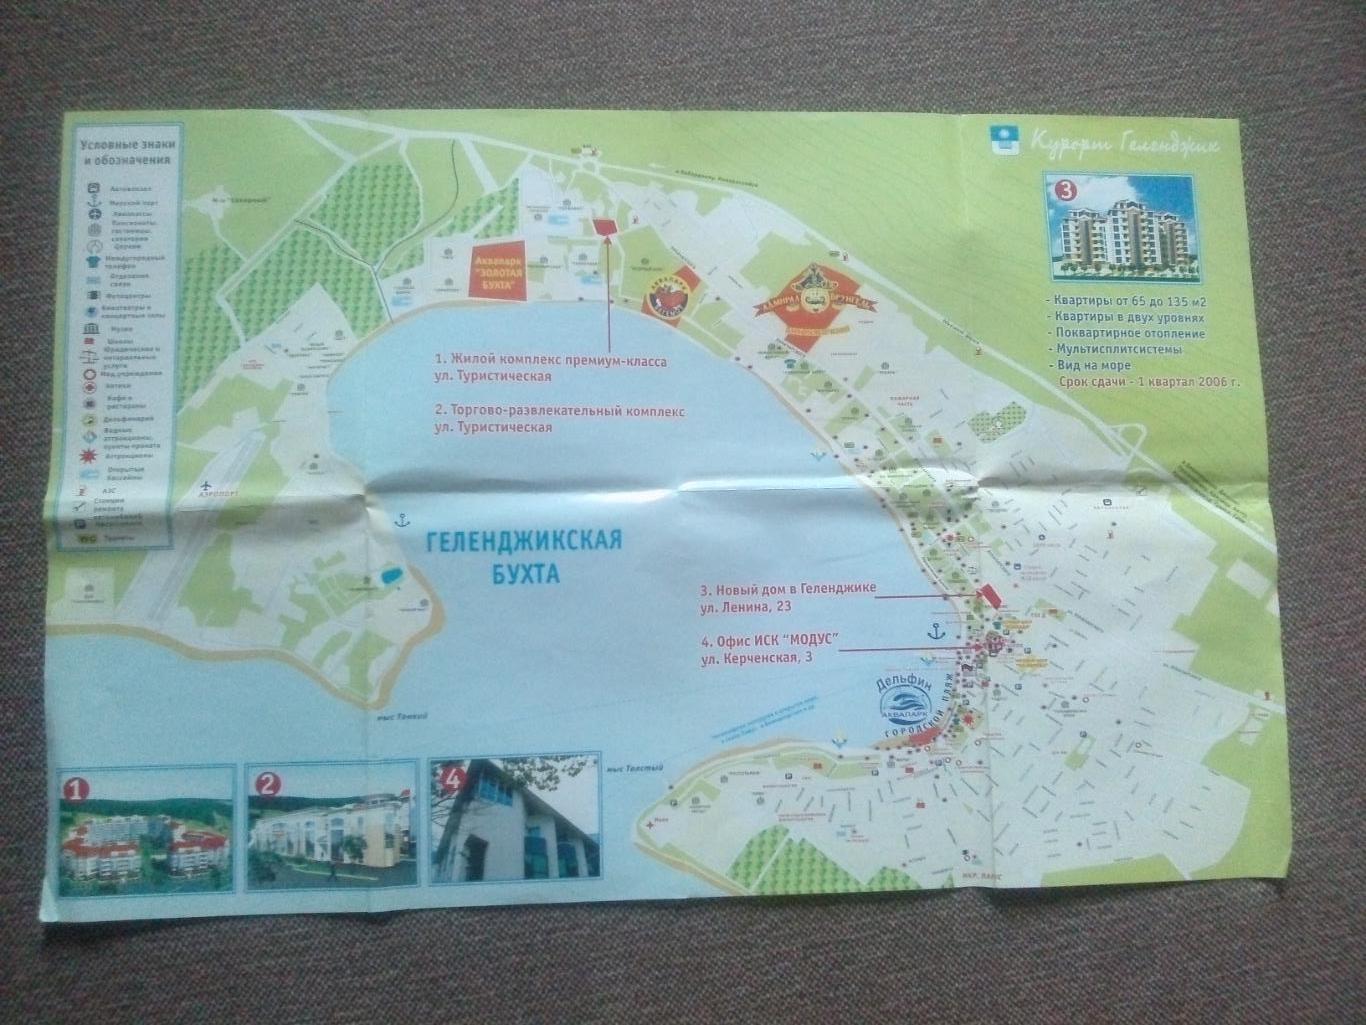 Карта - схема : Город - курорт Геленджик2000 - е годы (Краснодарский край) 2